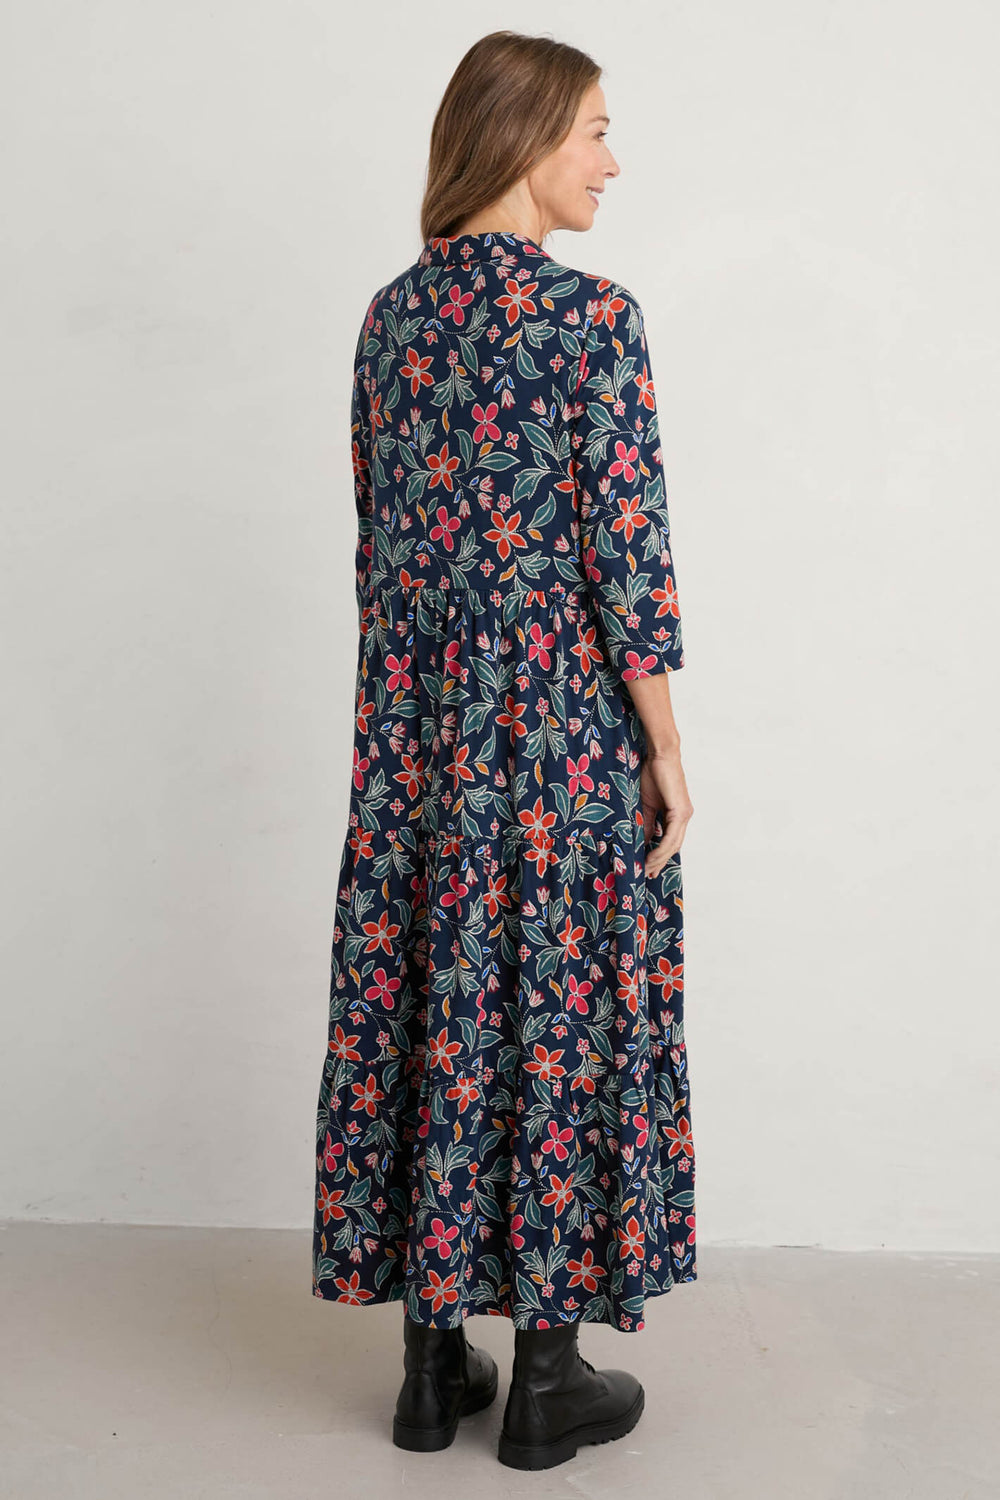 Seasalt Stitched Clematis Maritime Windflower Dress - Shirley Allum Boutique